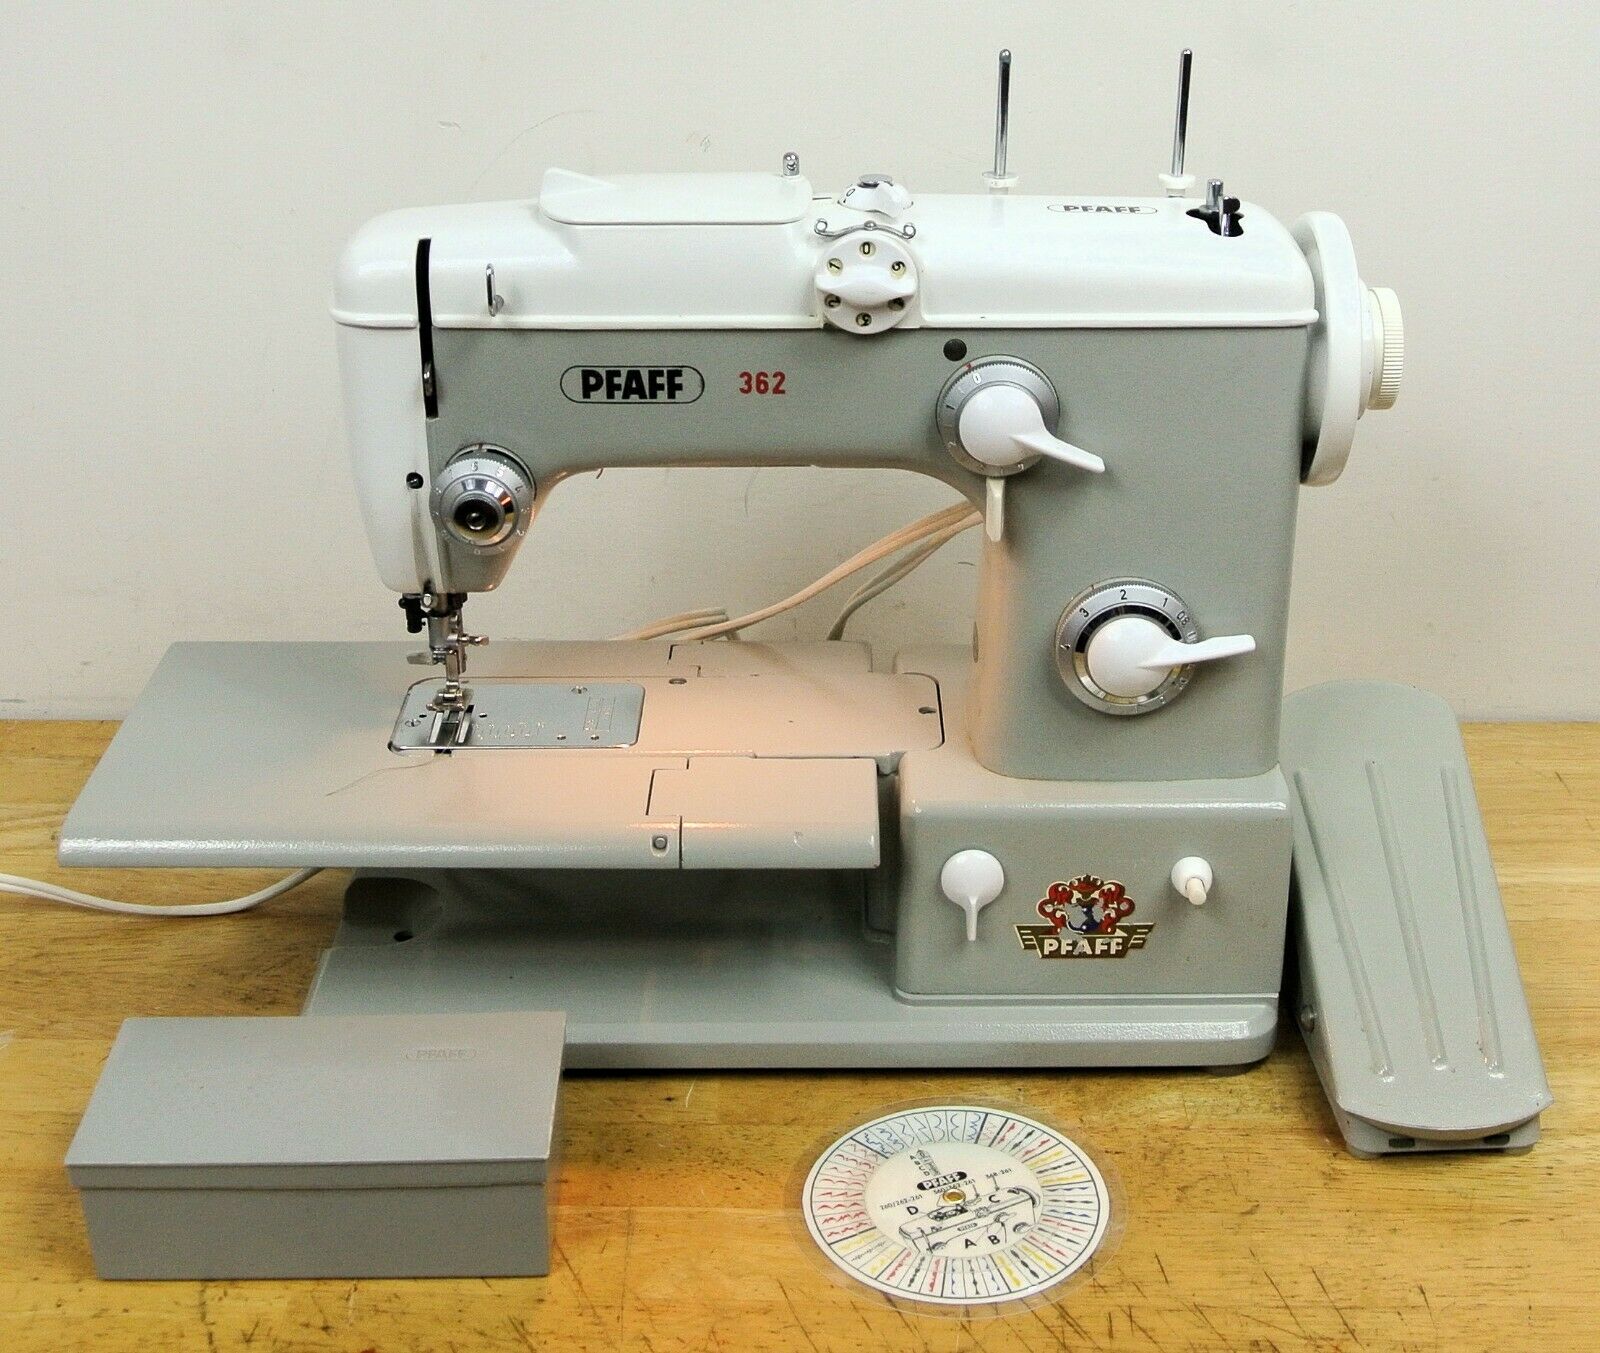 pfaff sewing machine model 362